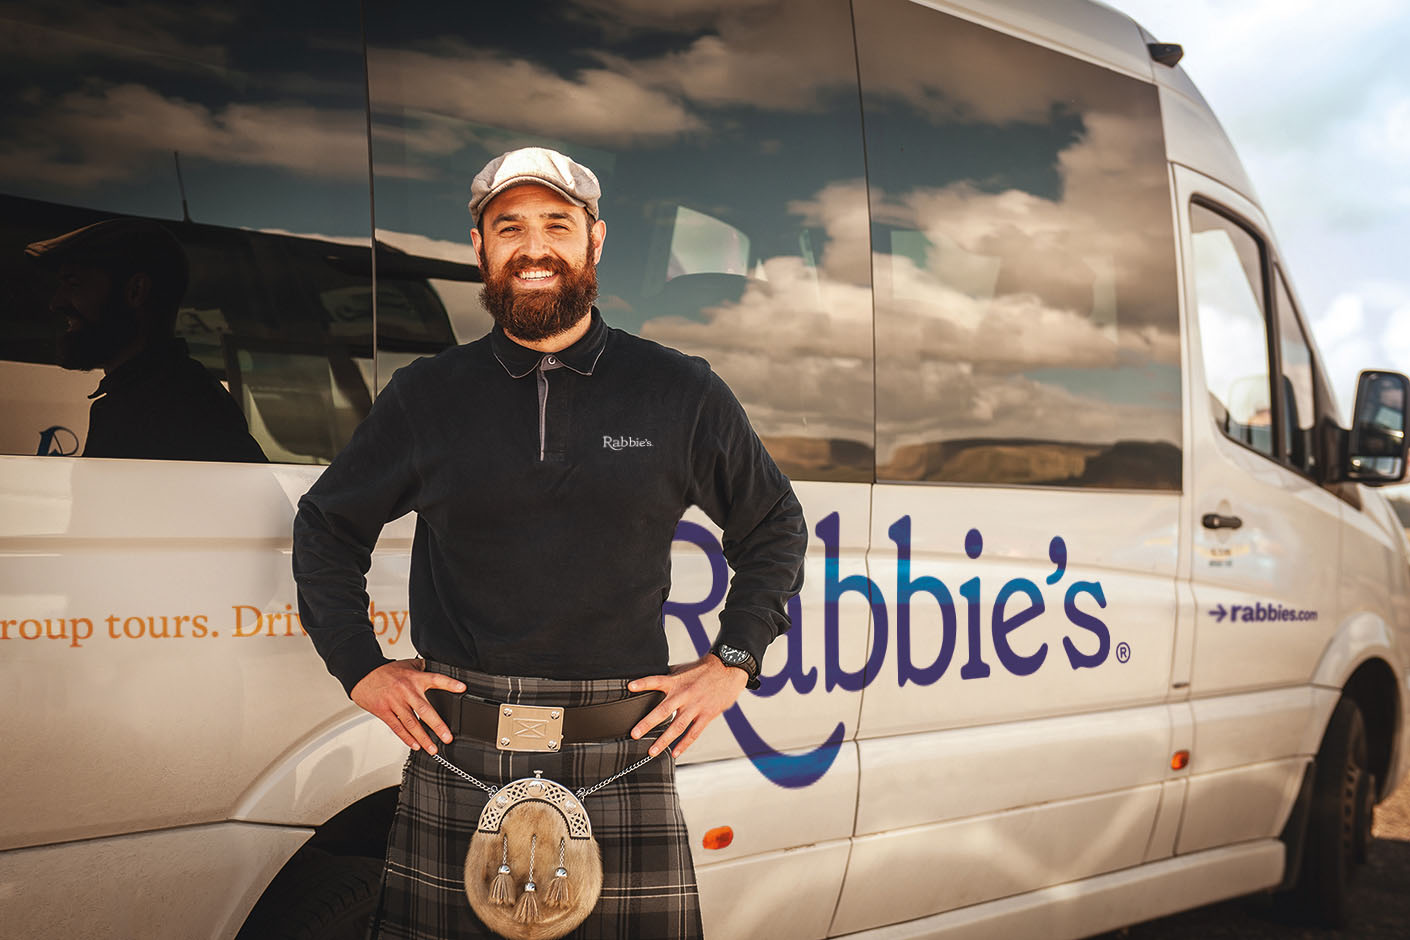 rabbies tours jobs